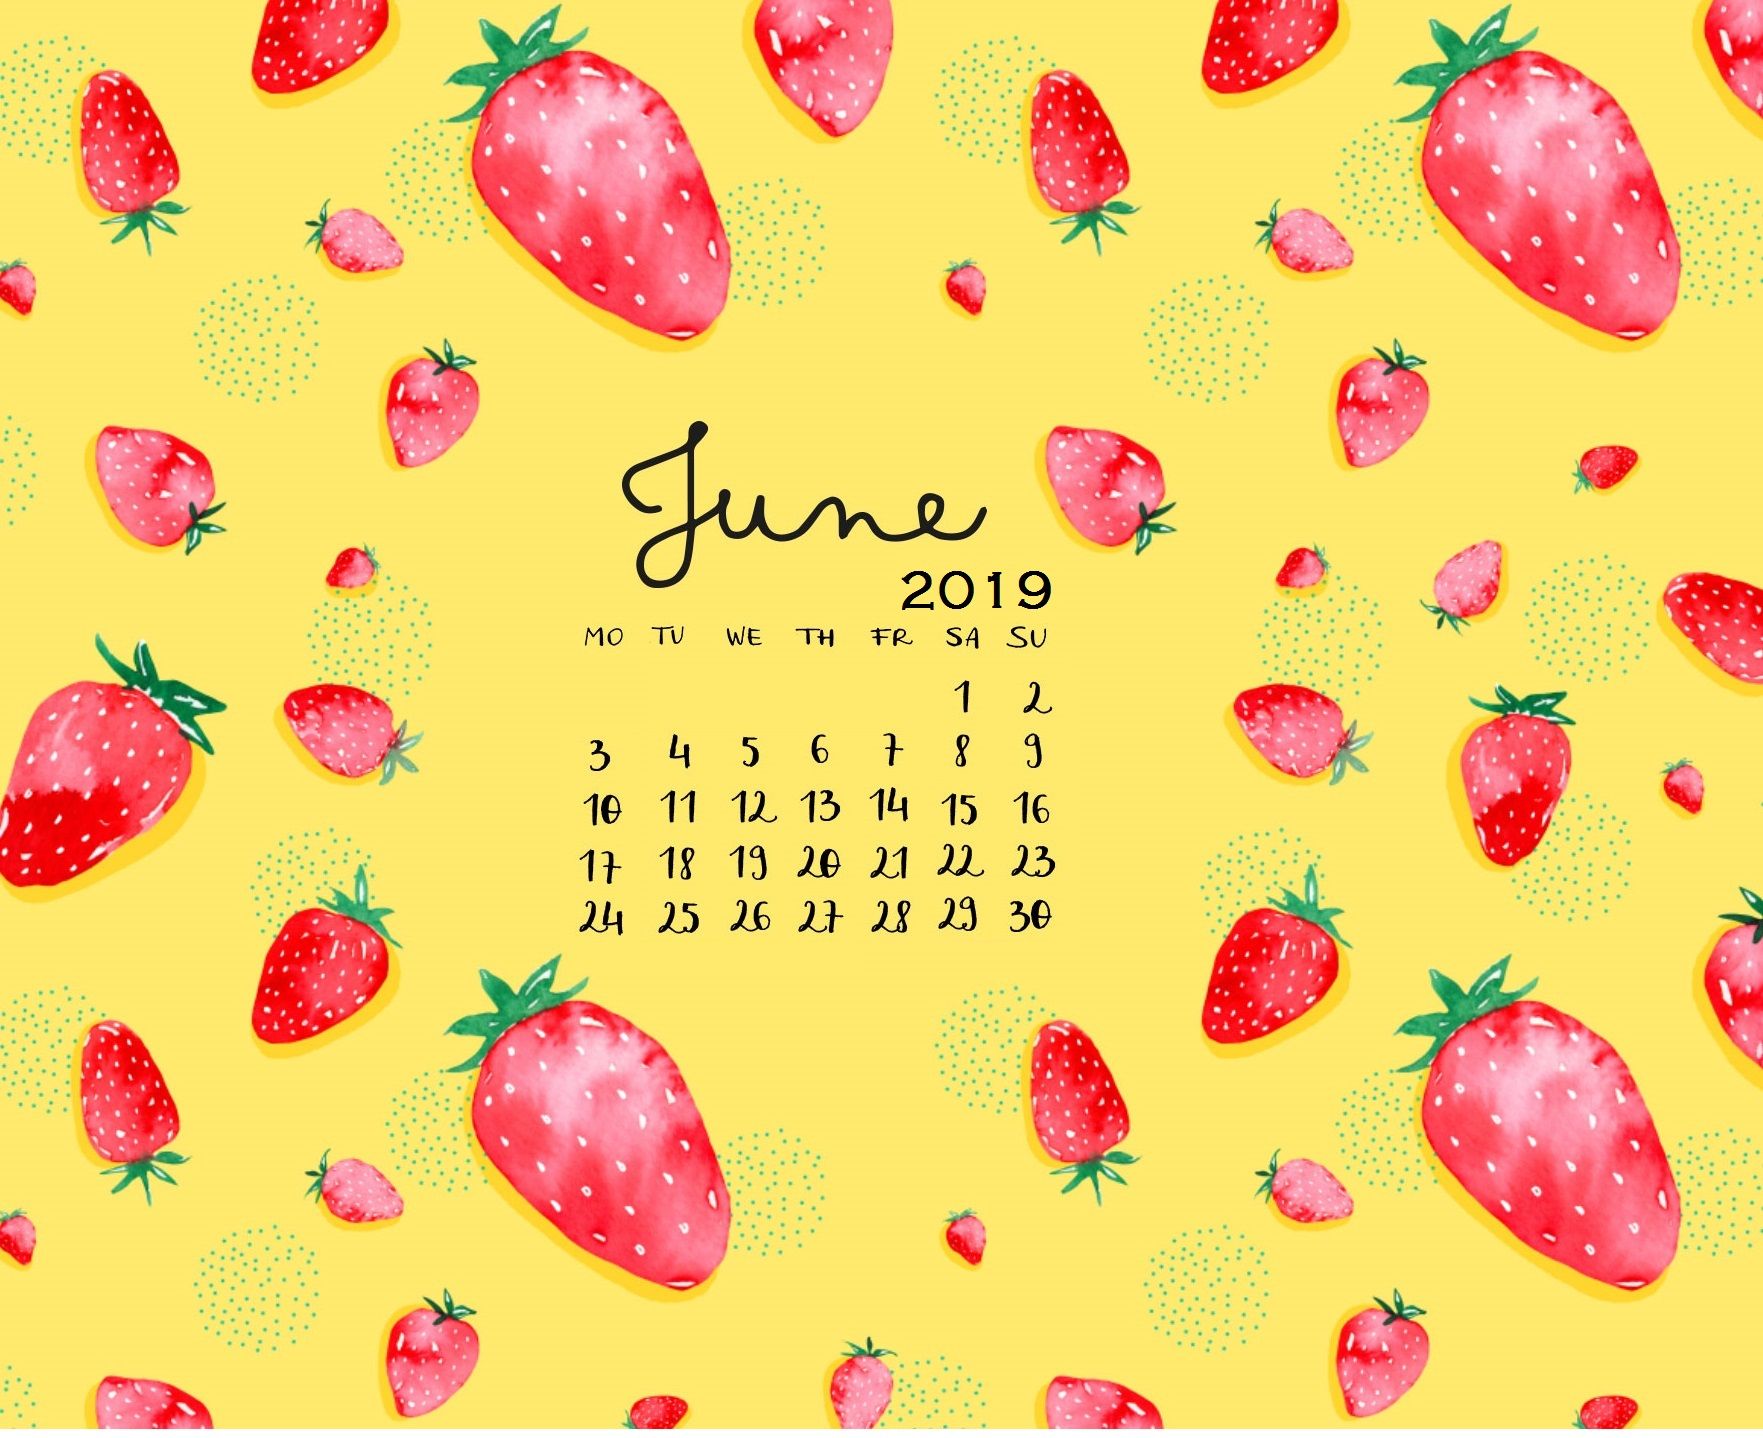 free-download-latest-june-2019-calendar-for-desktop-calendar-wallpaper